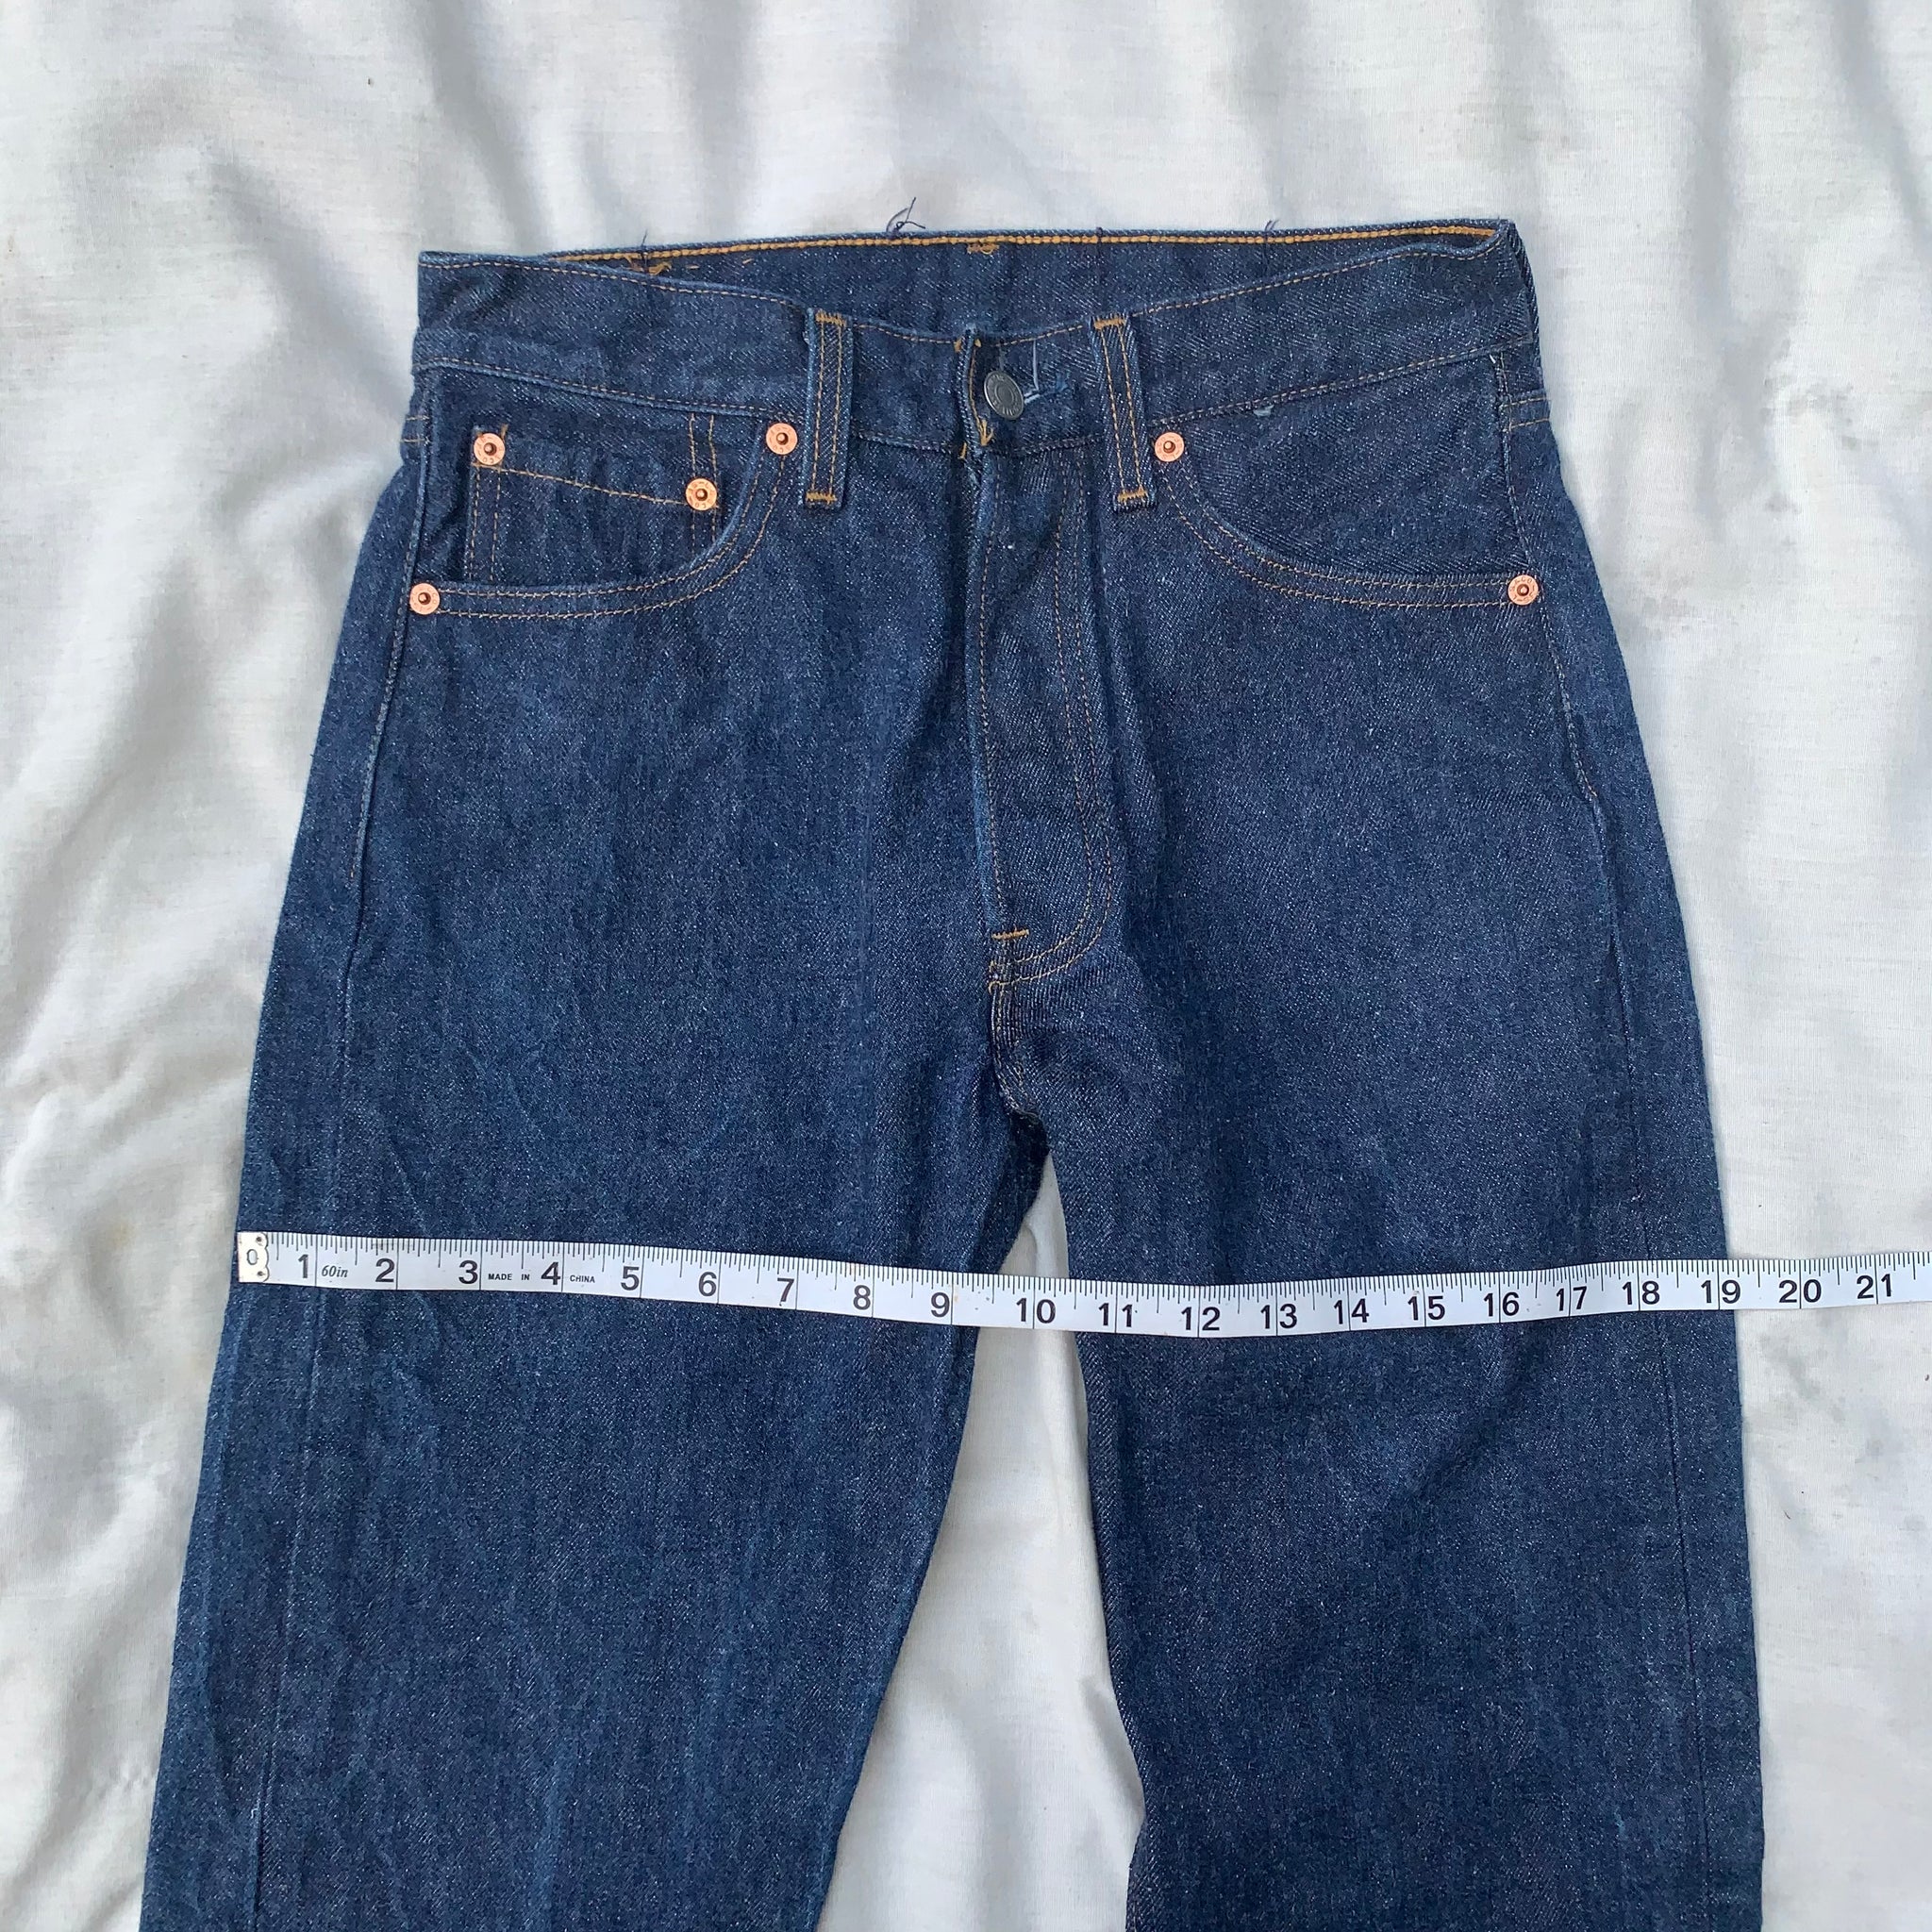 Vintage Levi’s High-Waisted Medium Wash Mid-Rise Straight Leg Jeans (26”x29”)